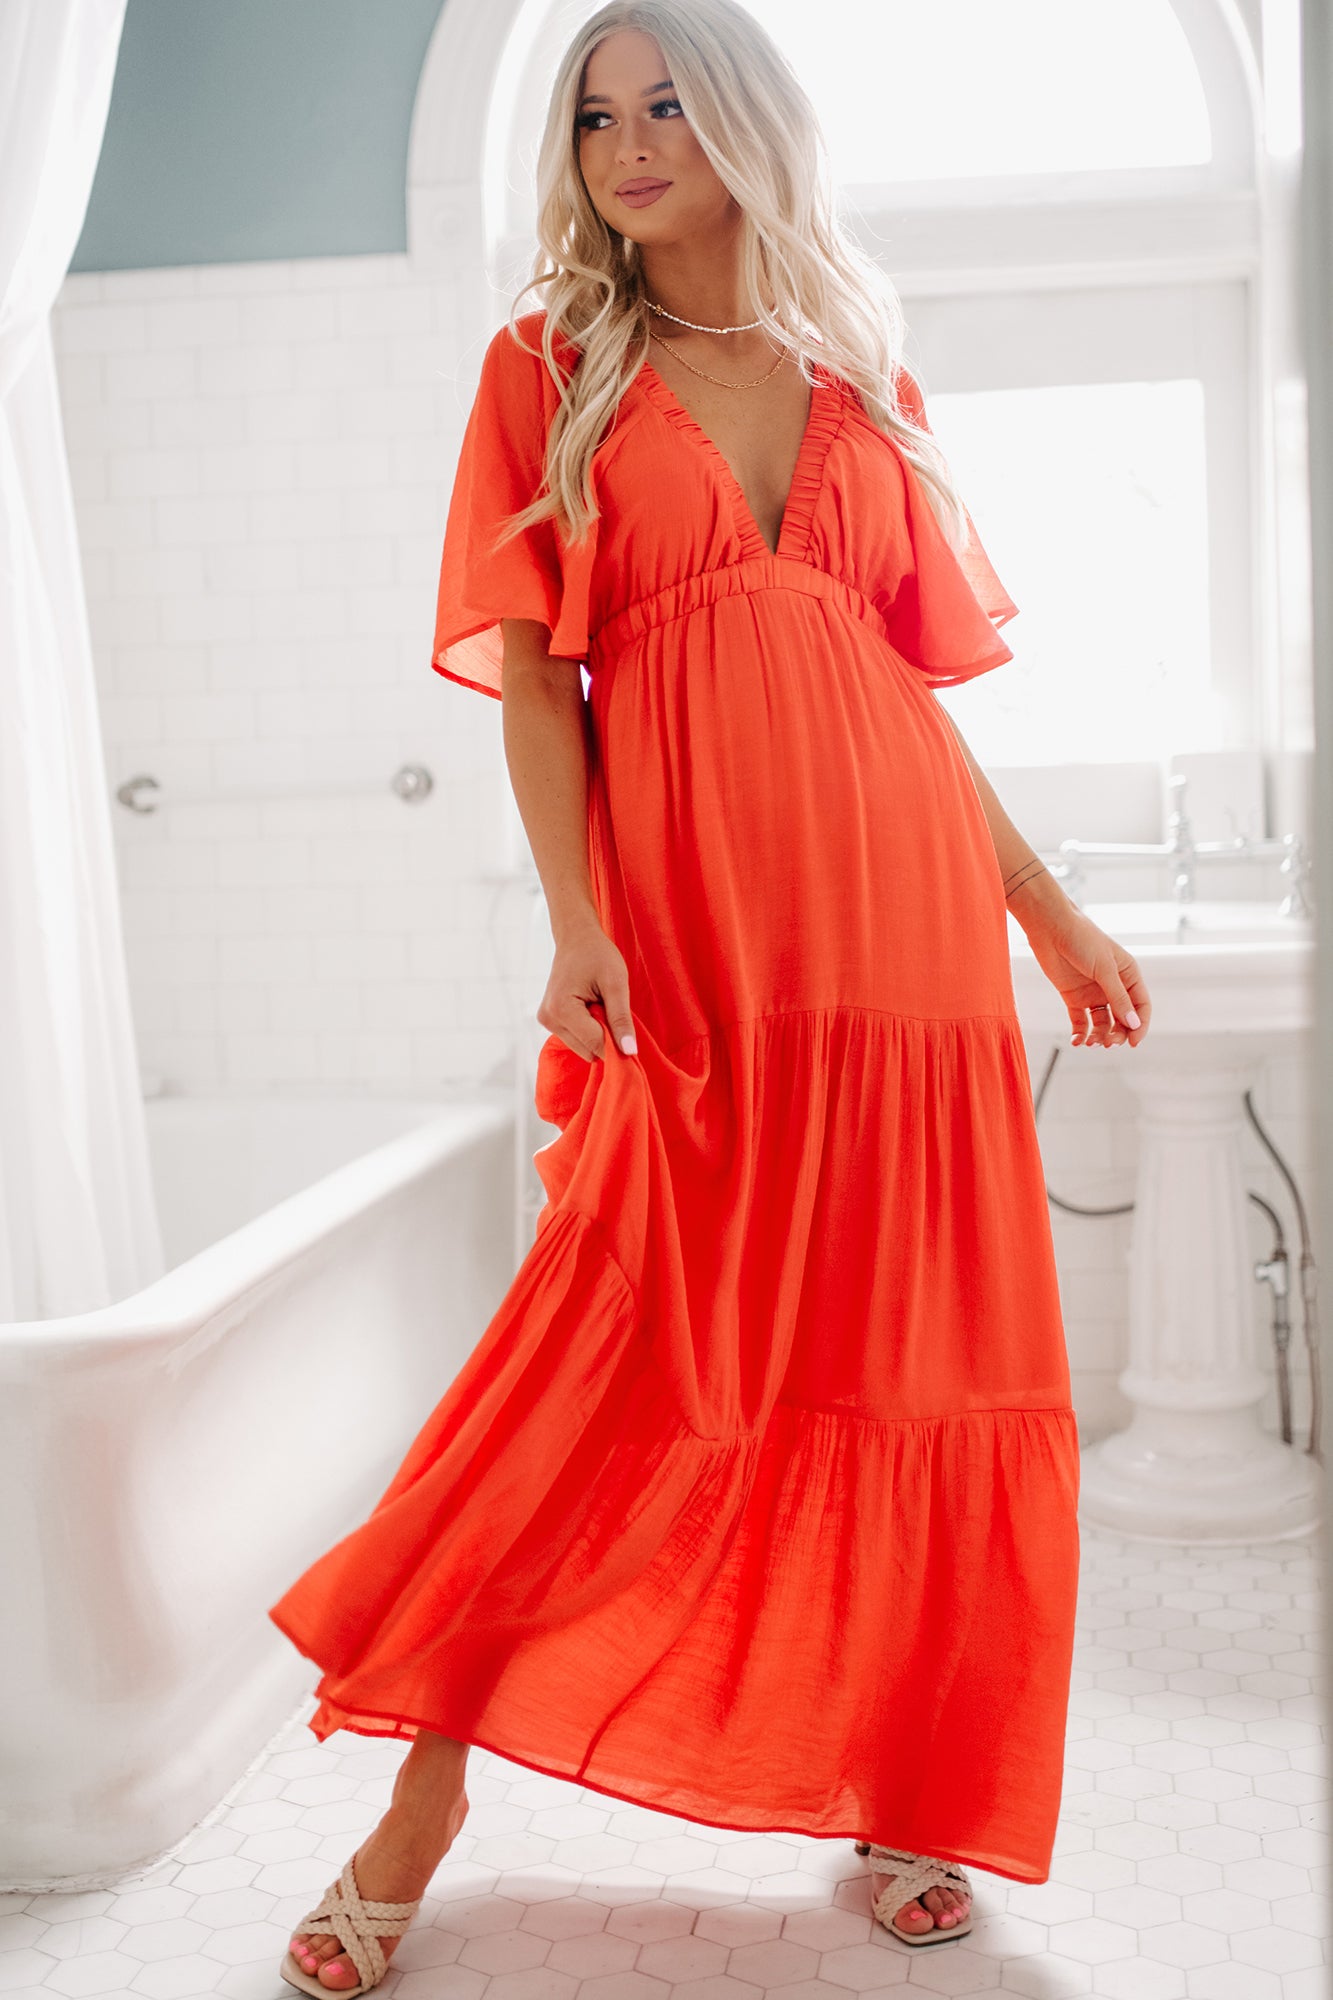 red orange dress